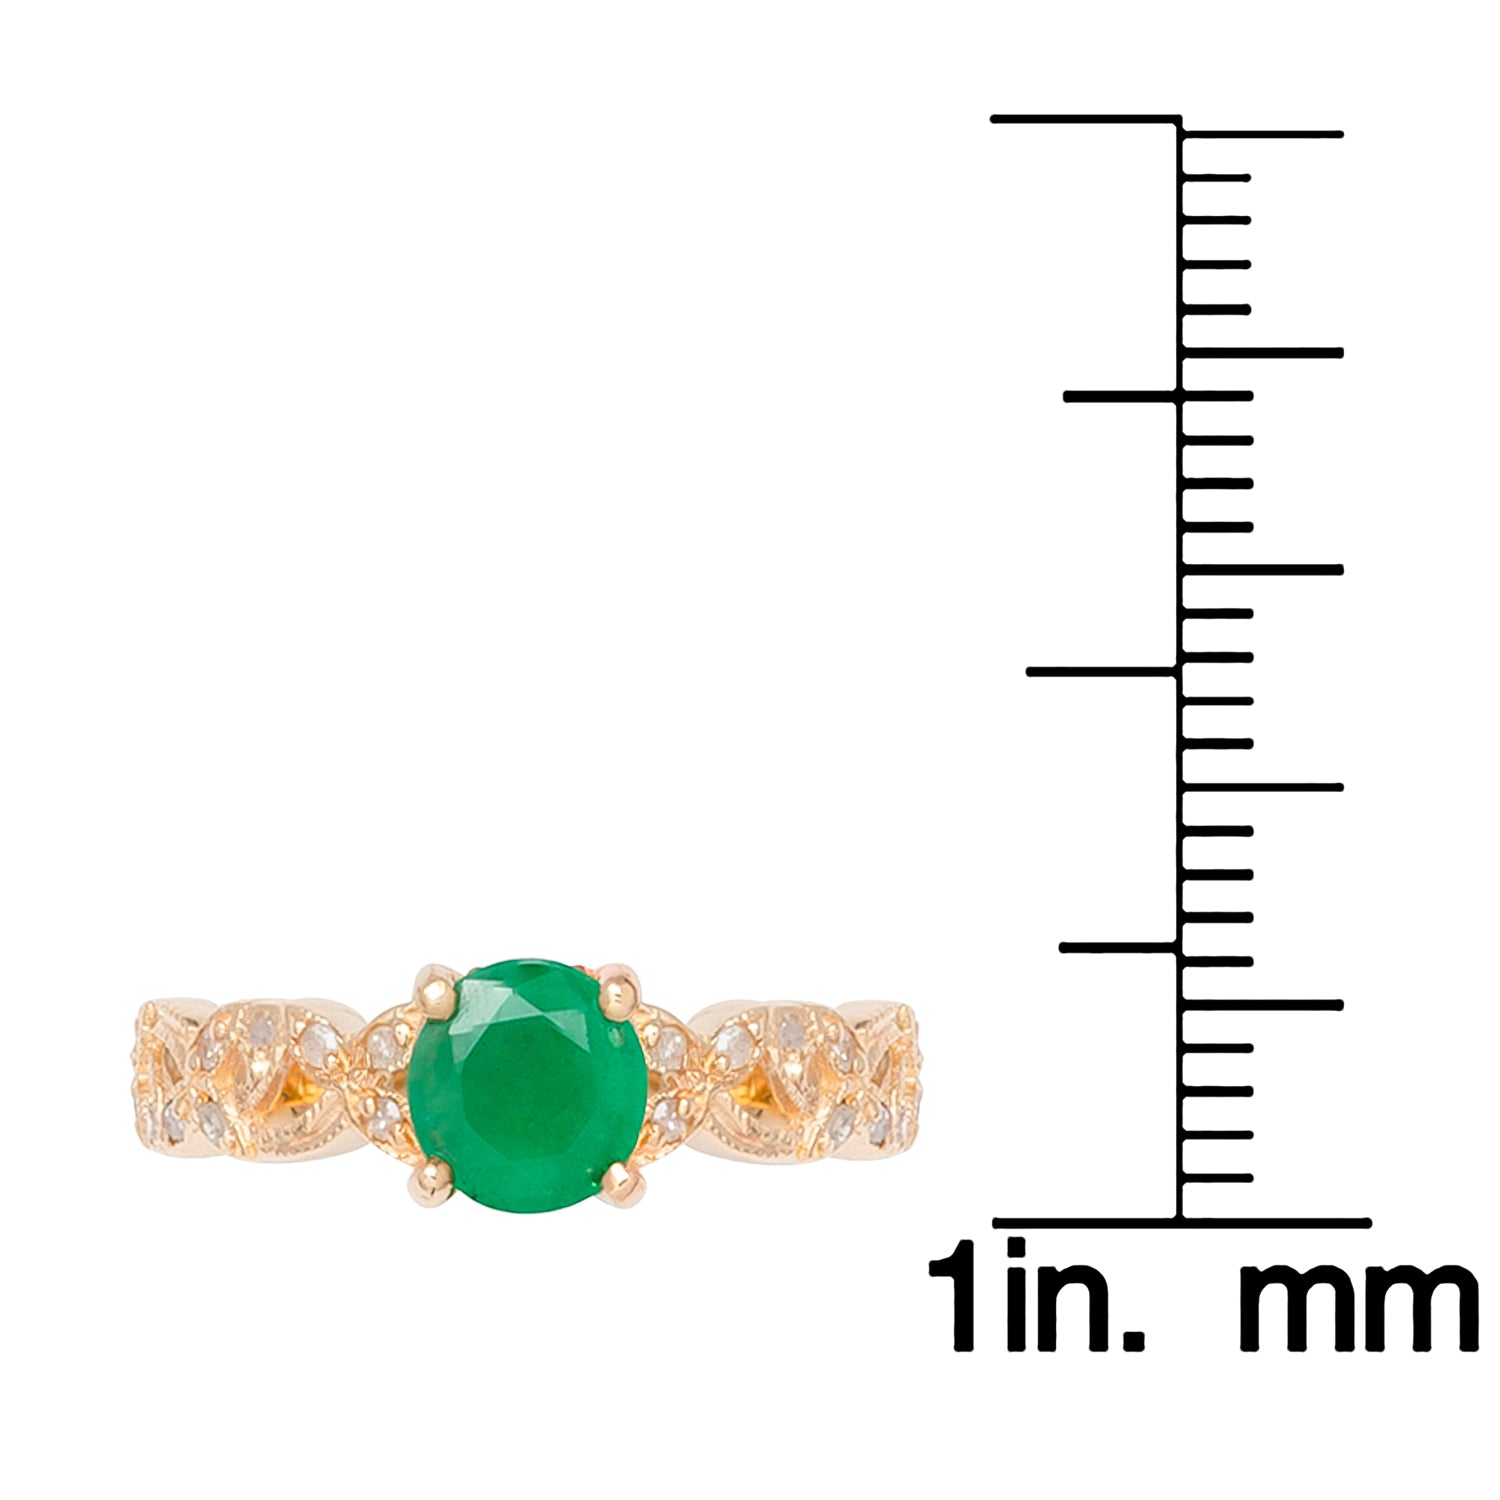 10k Yellow Gold Vintage Style Genuine Round Emerald and Diamond Filigree Ring